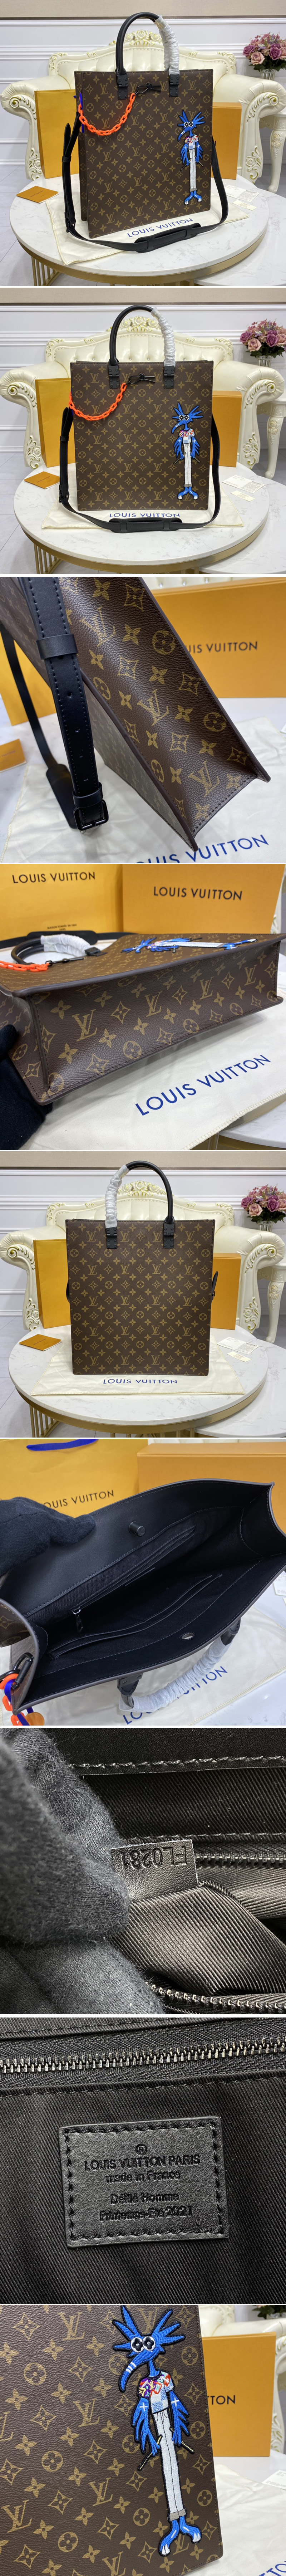 Louis Vuitton M45667 LV Sac Plat Messenger Bag in Monogram coated canvas  Replica sale online ,buy fake bag